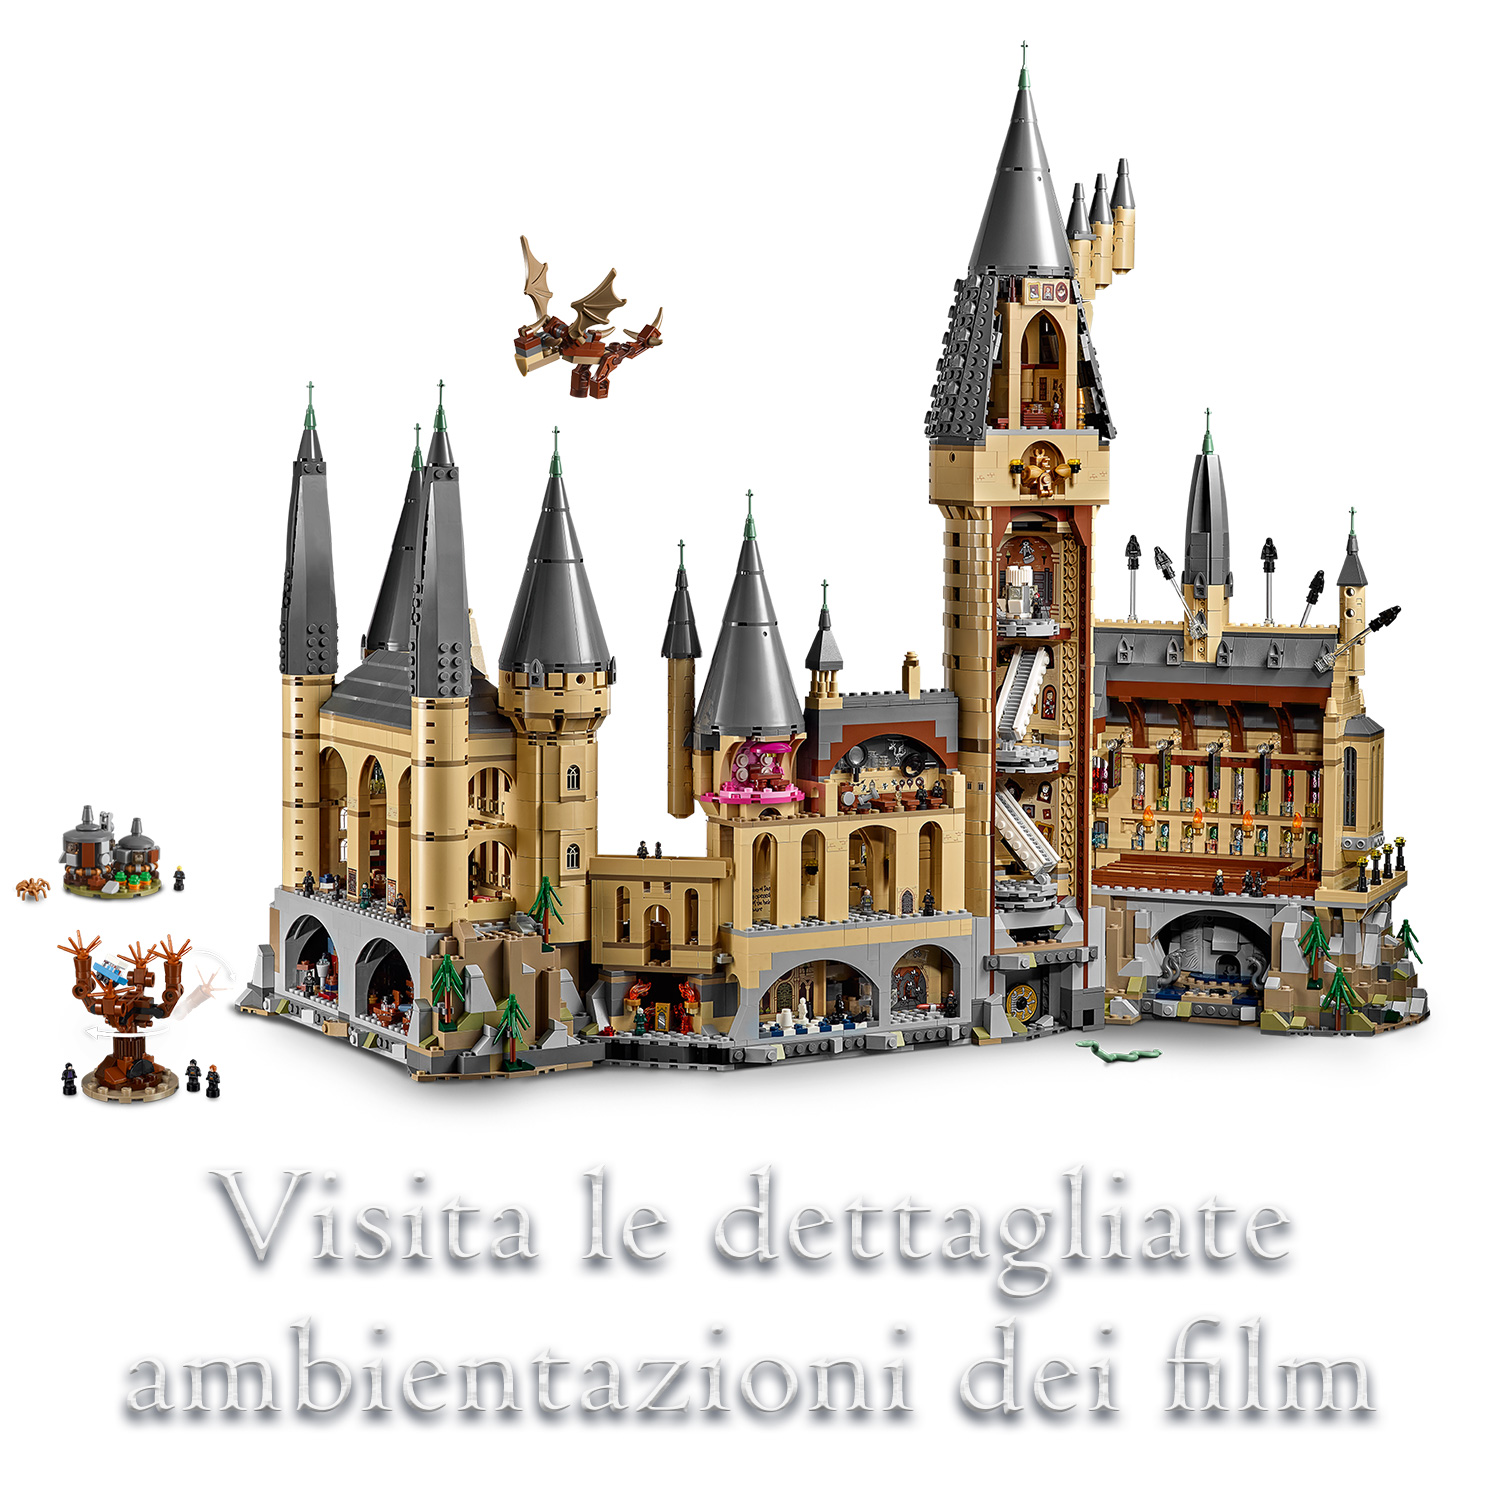 Kit di costruzione LEGO Harry Potter Castello di Hogwarts 71043 (6.020 pezzi) 71043, , large